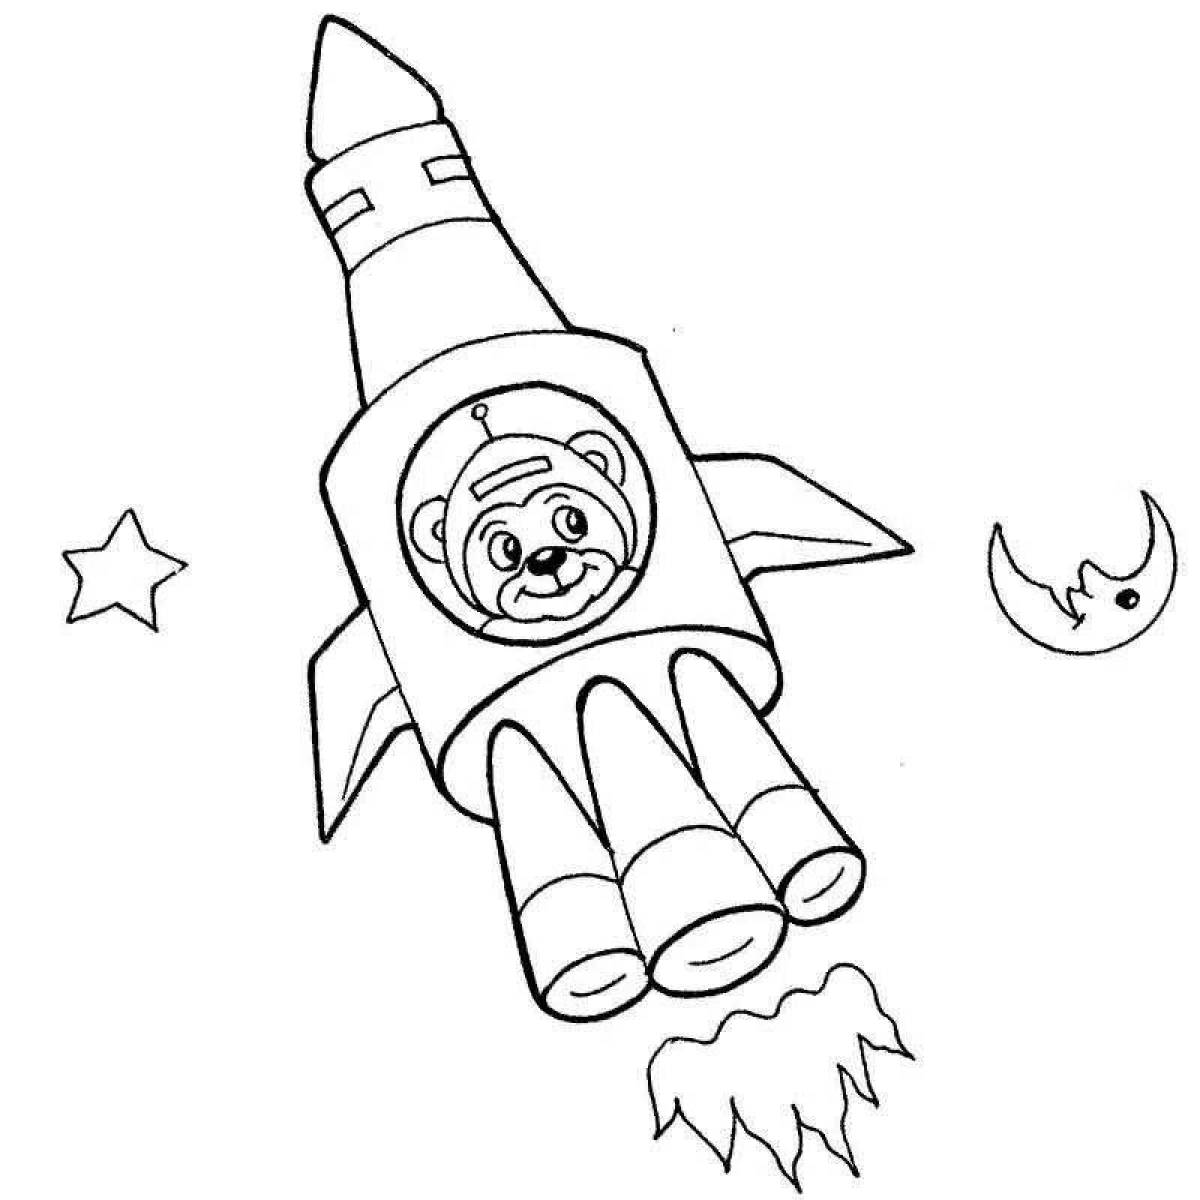 Drawing of a beam rocket